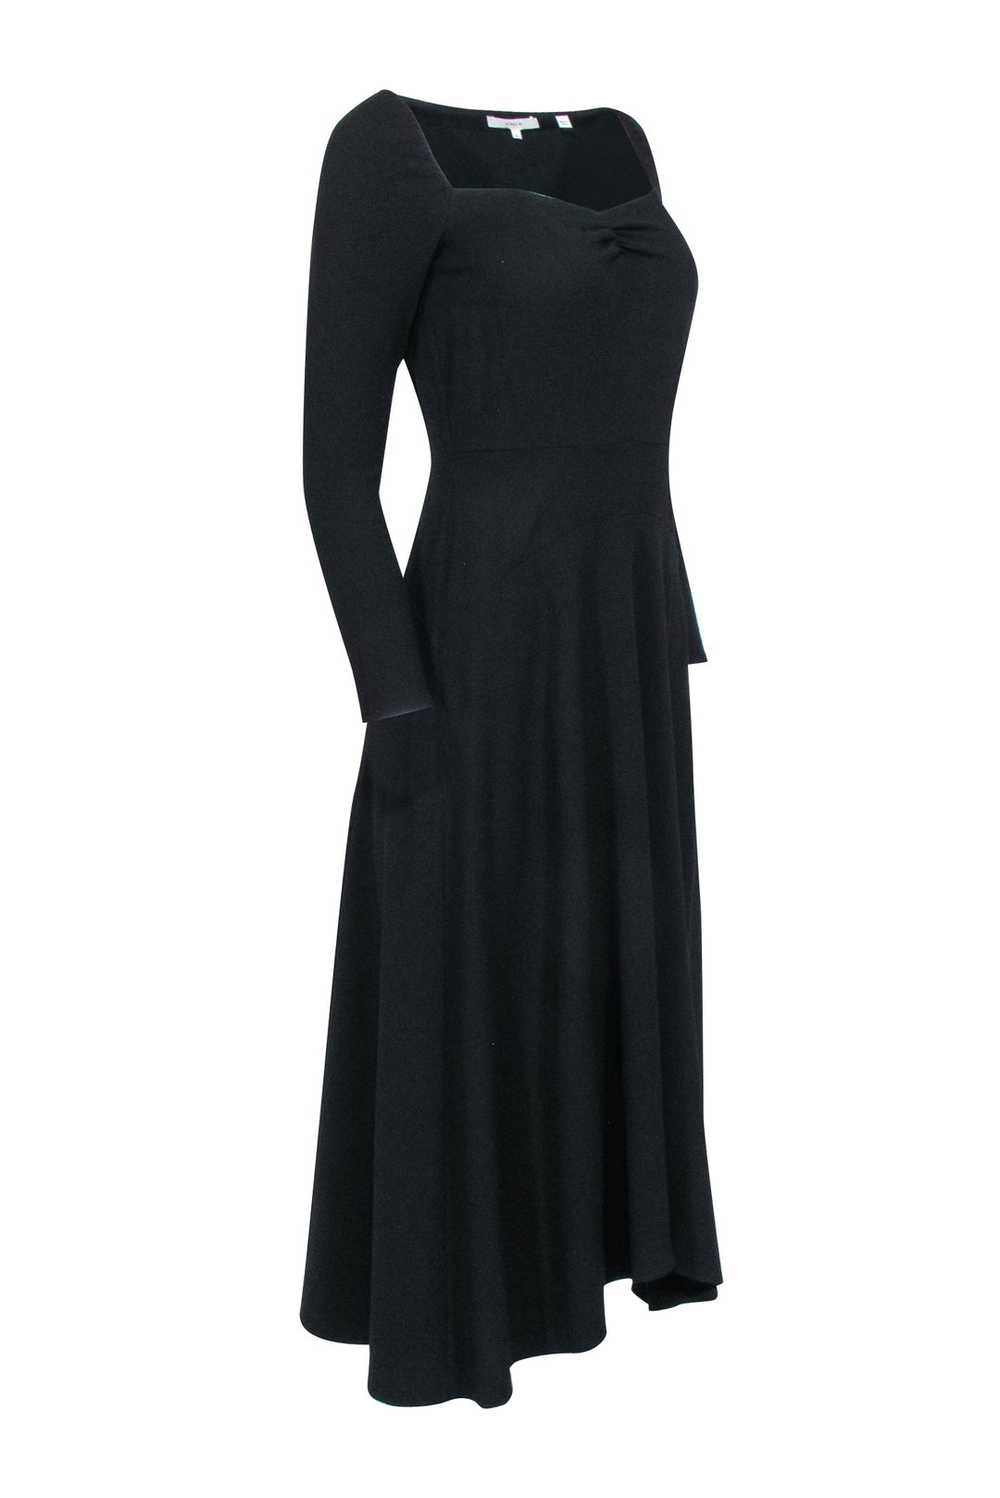 Vince - Black Long Sleeve Midi Dress Sz 0 - image 2